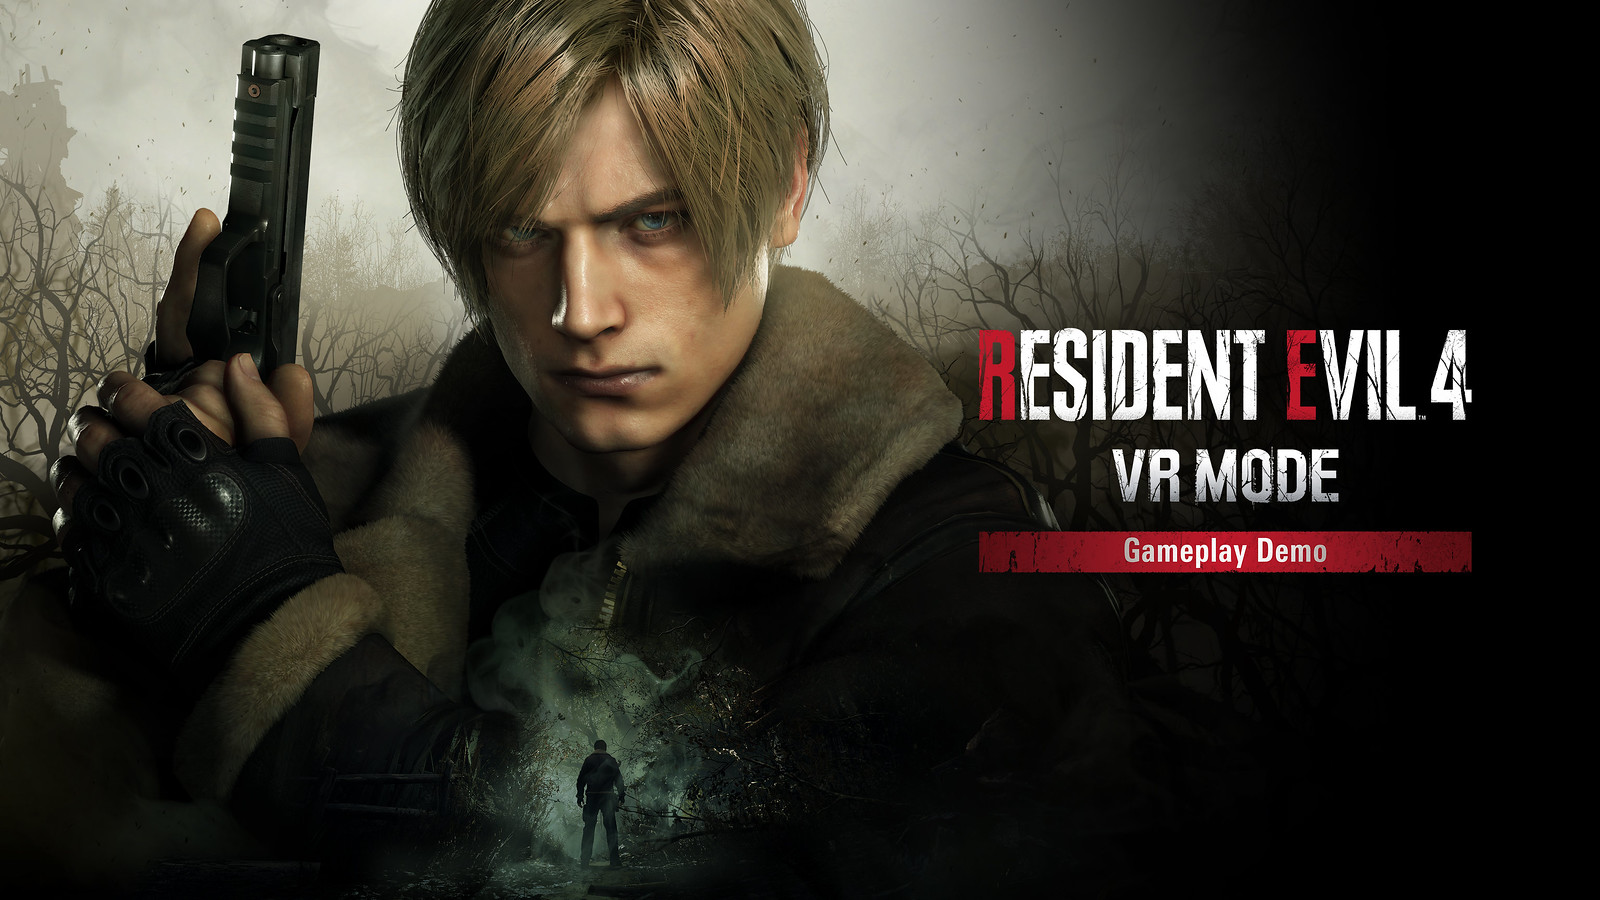 53349743120 e06255f9f2 h - Resident Evil 4 VR-Modus ab 8. Dezember, eigenständige PS VR2-Gameplay-Demo noch am selben Tag verfügbar